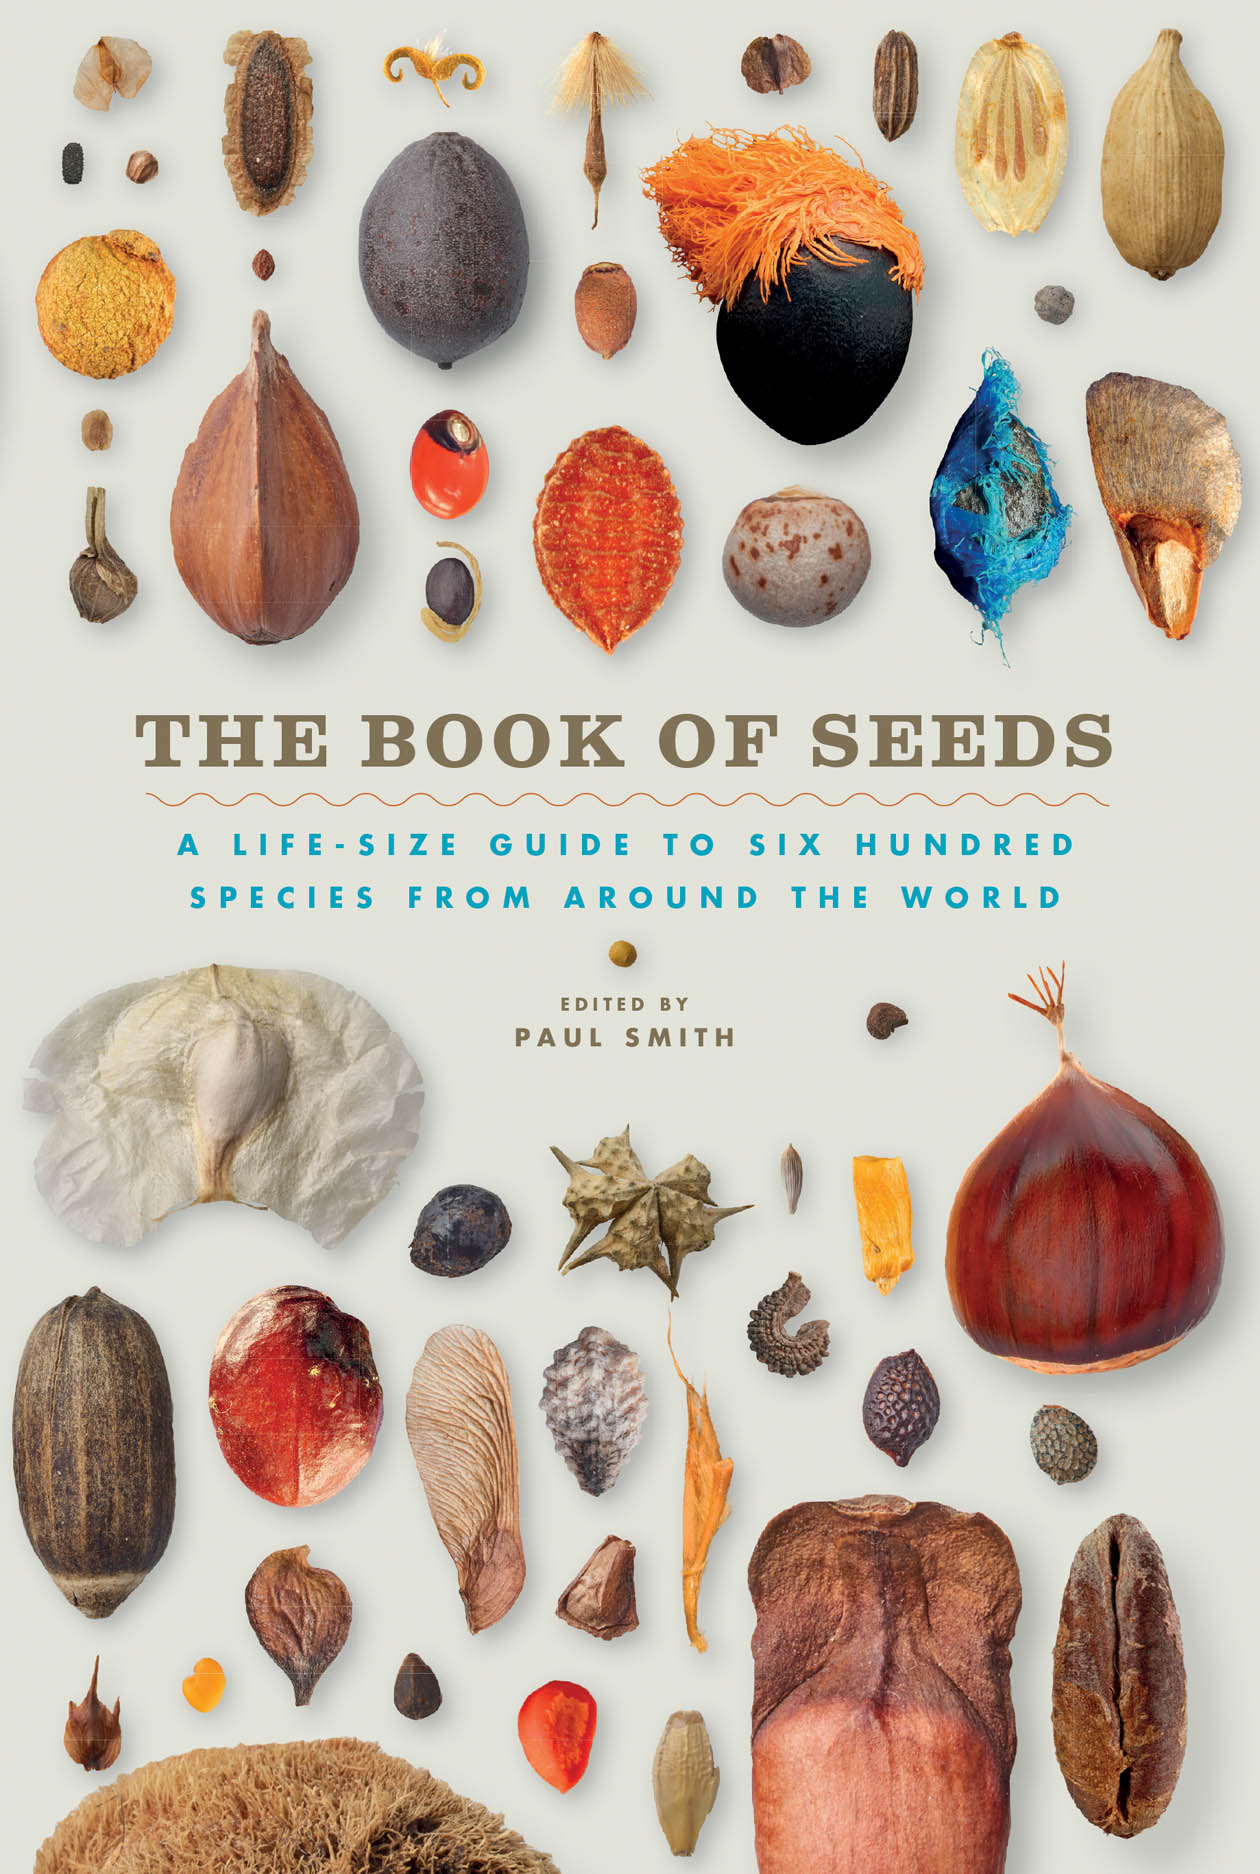 Book of Seeds jacket image